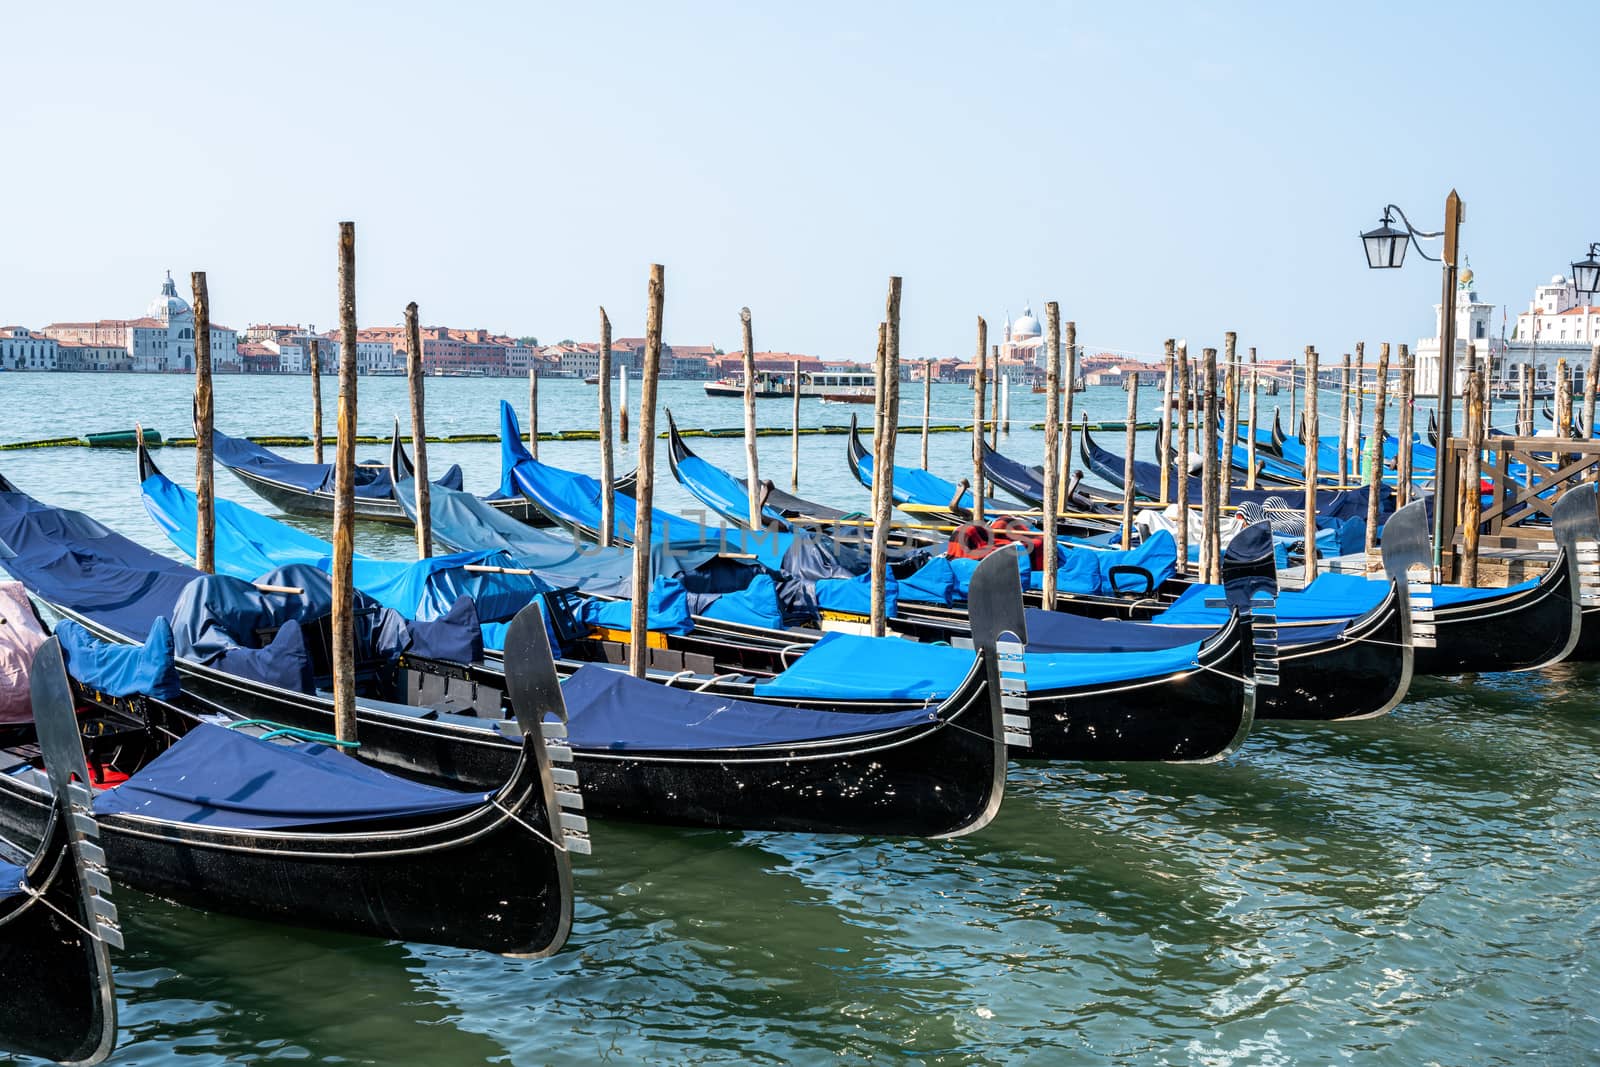 Gondolas at the Piazza San Marco in Venice, Italy